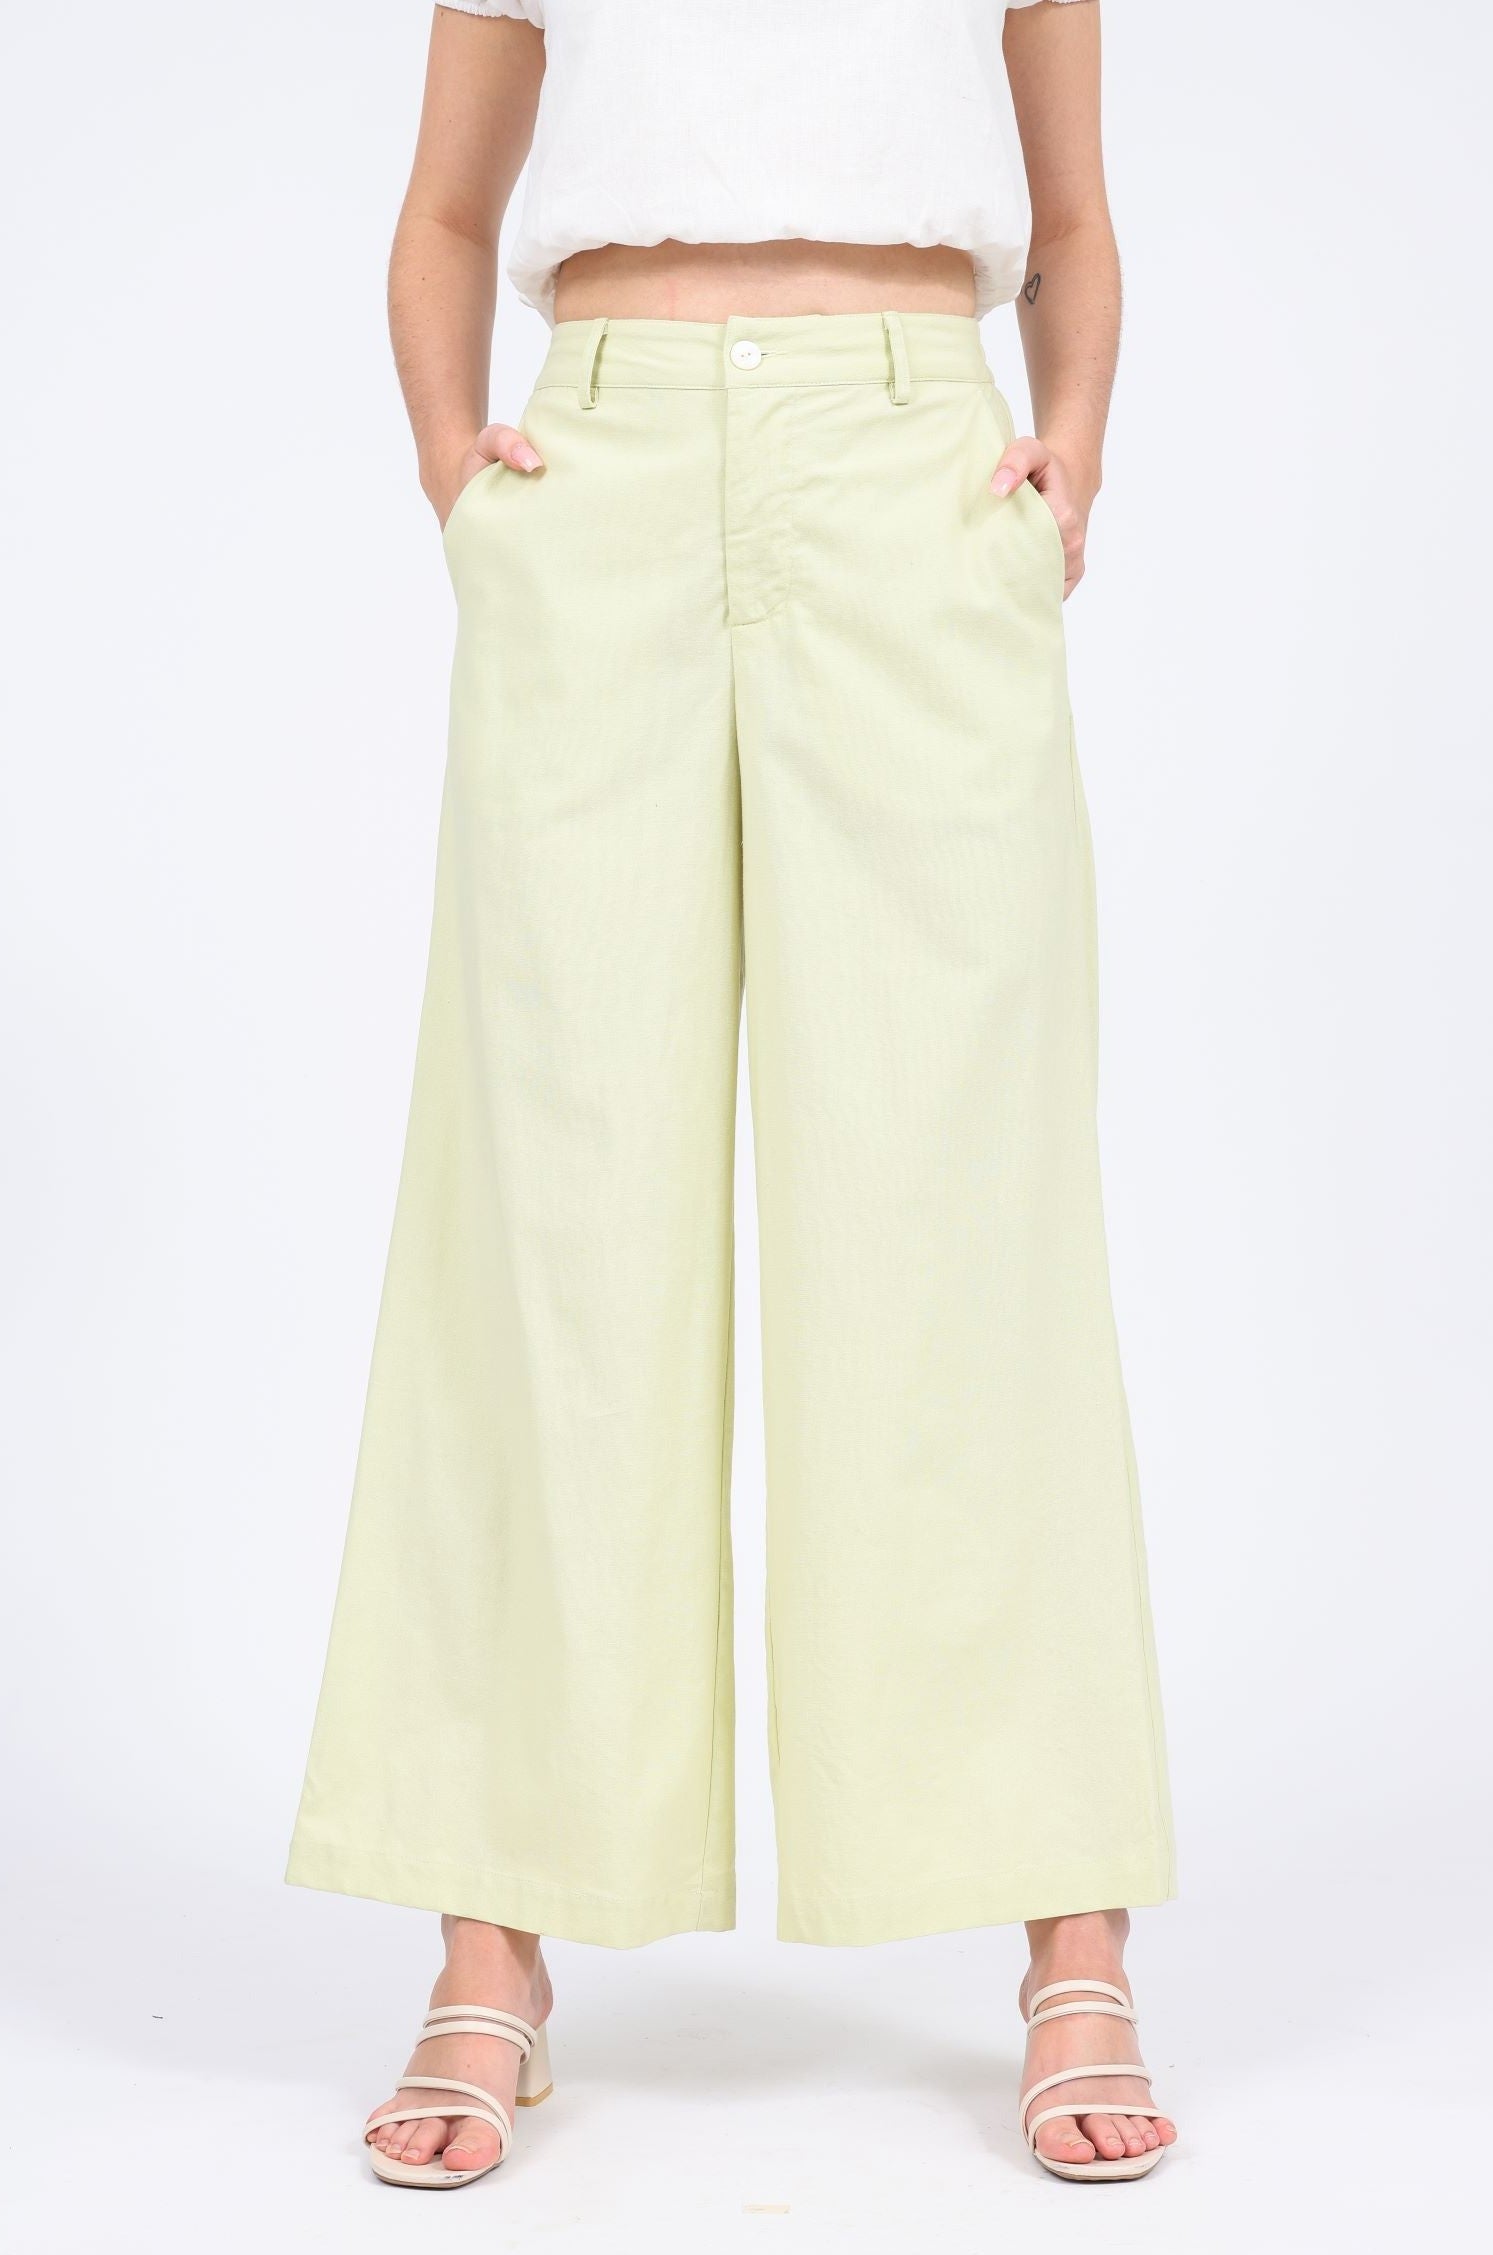 Yellow Pants - Elastic Waist Pants - Cream High Waist Wide Leg Pants